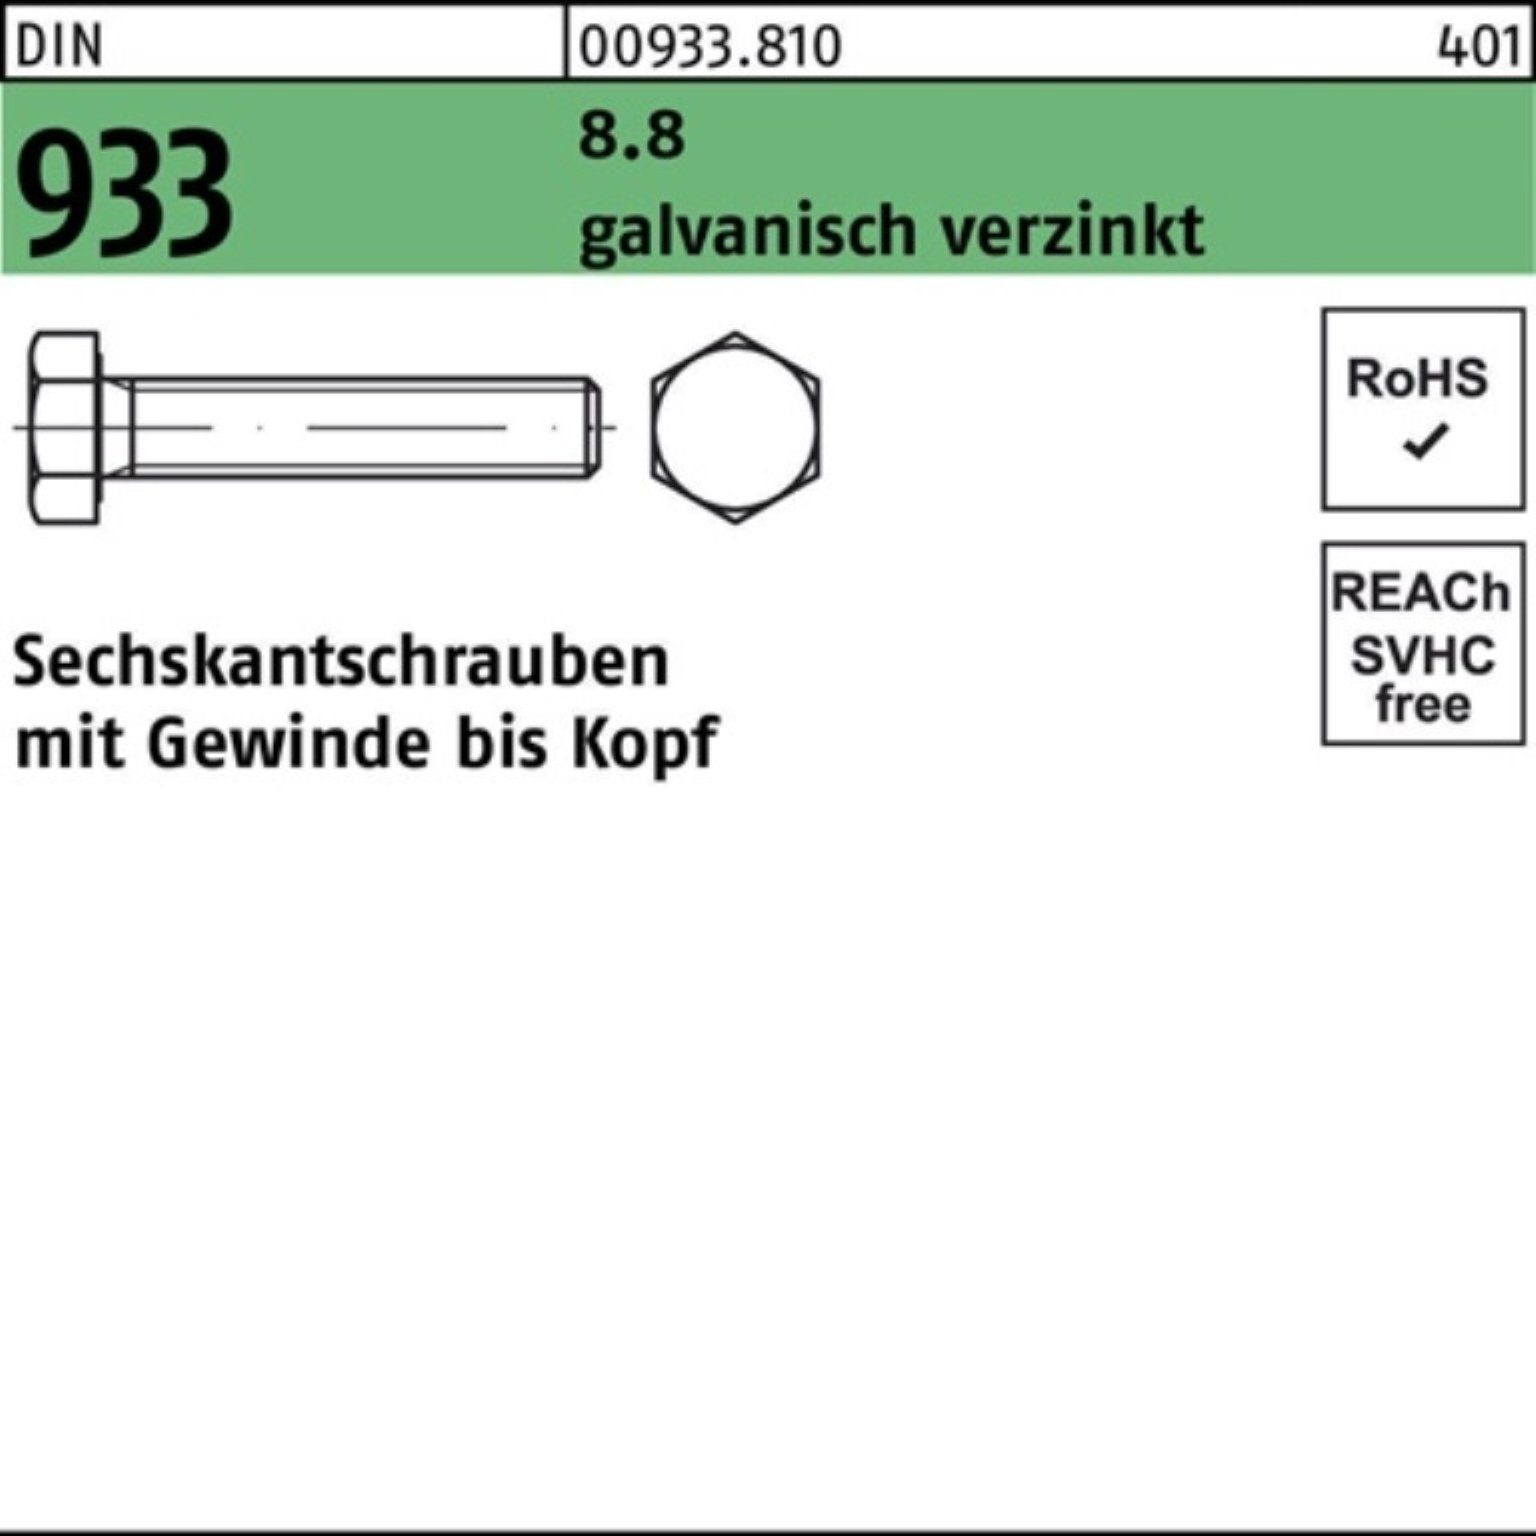 Reyher Sechskantschraube 100er Pack Sechskantschraube 933 8.8 25 St VG galv.verz. DIN M16x 100